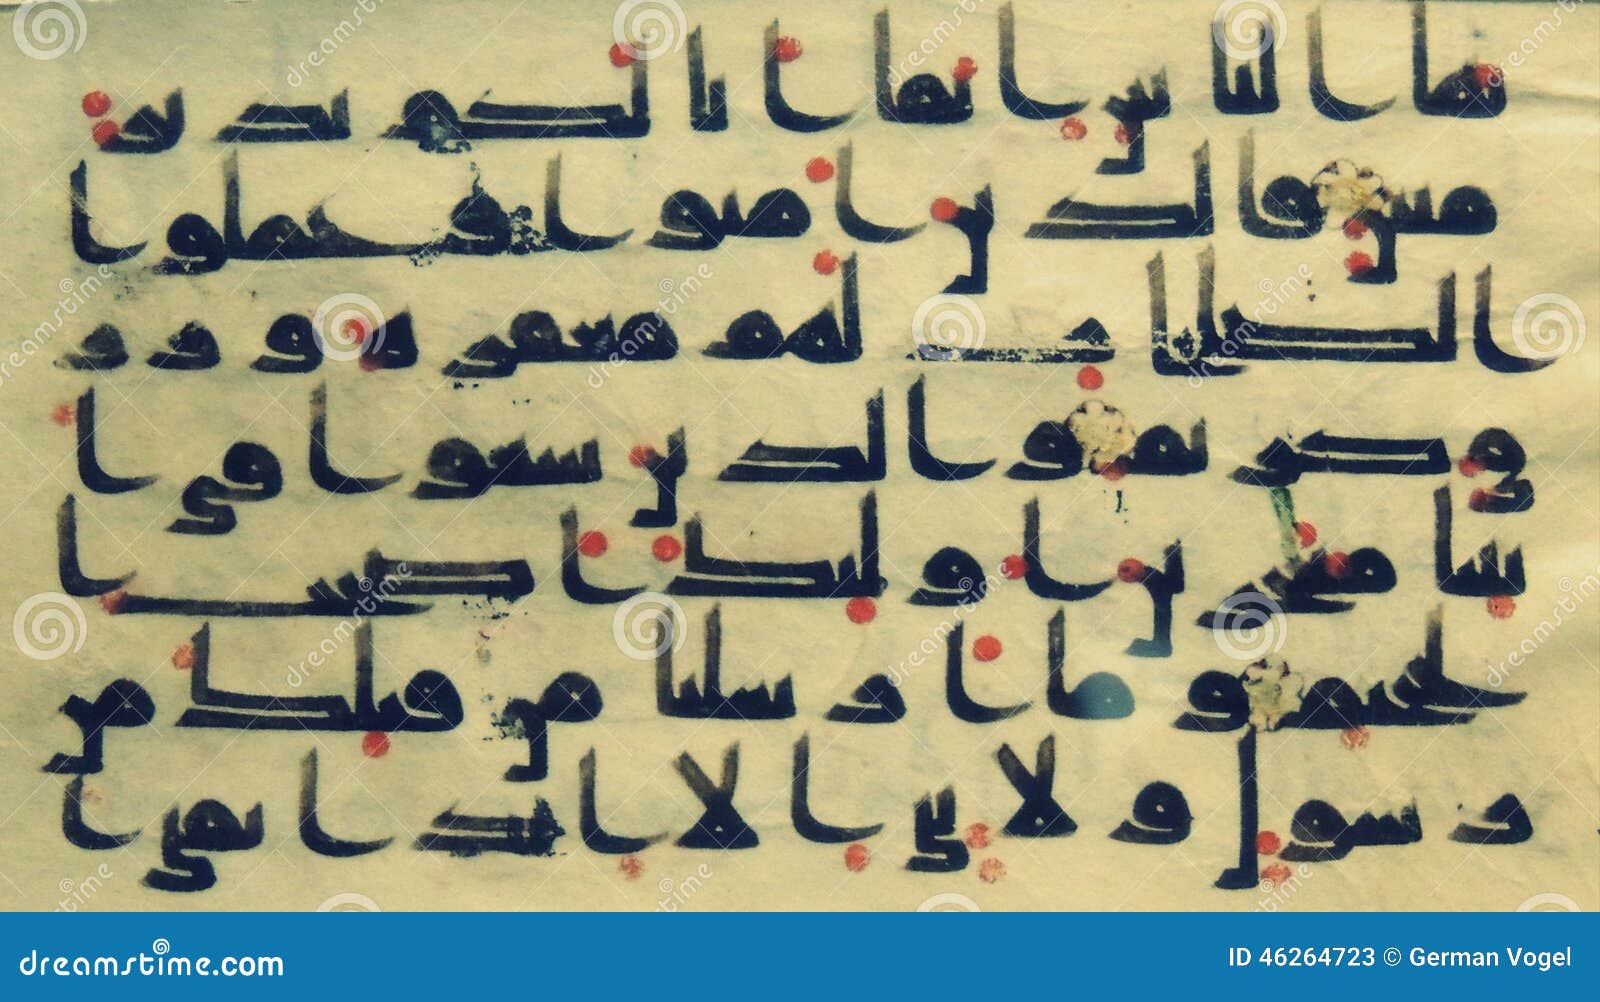 late 8th century quran manuscript islamic kufic calligraphy